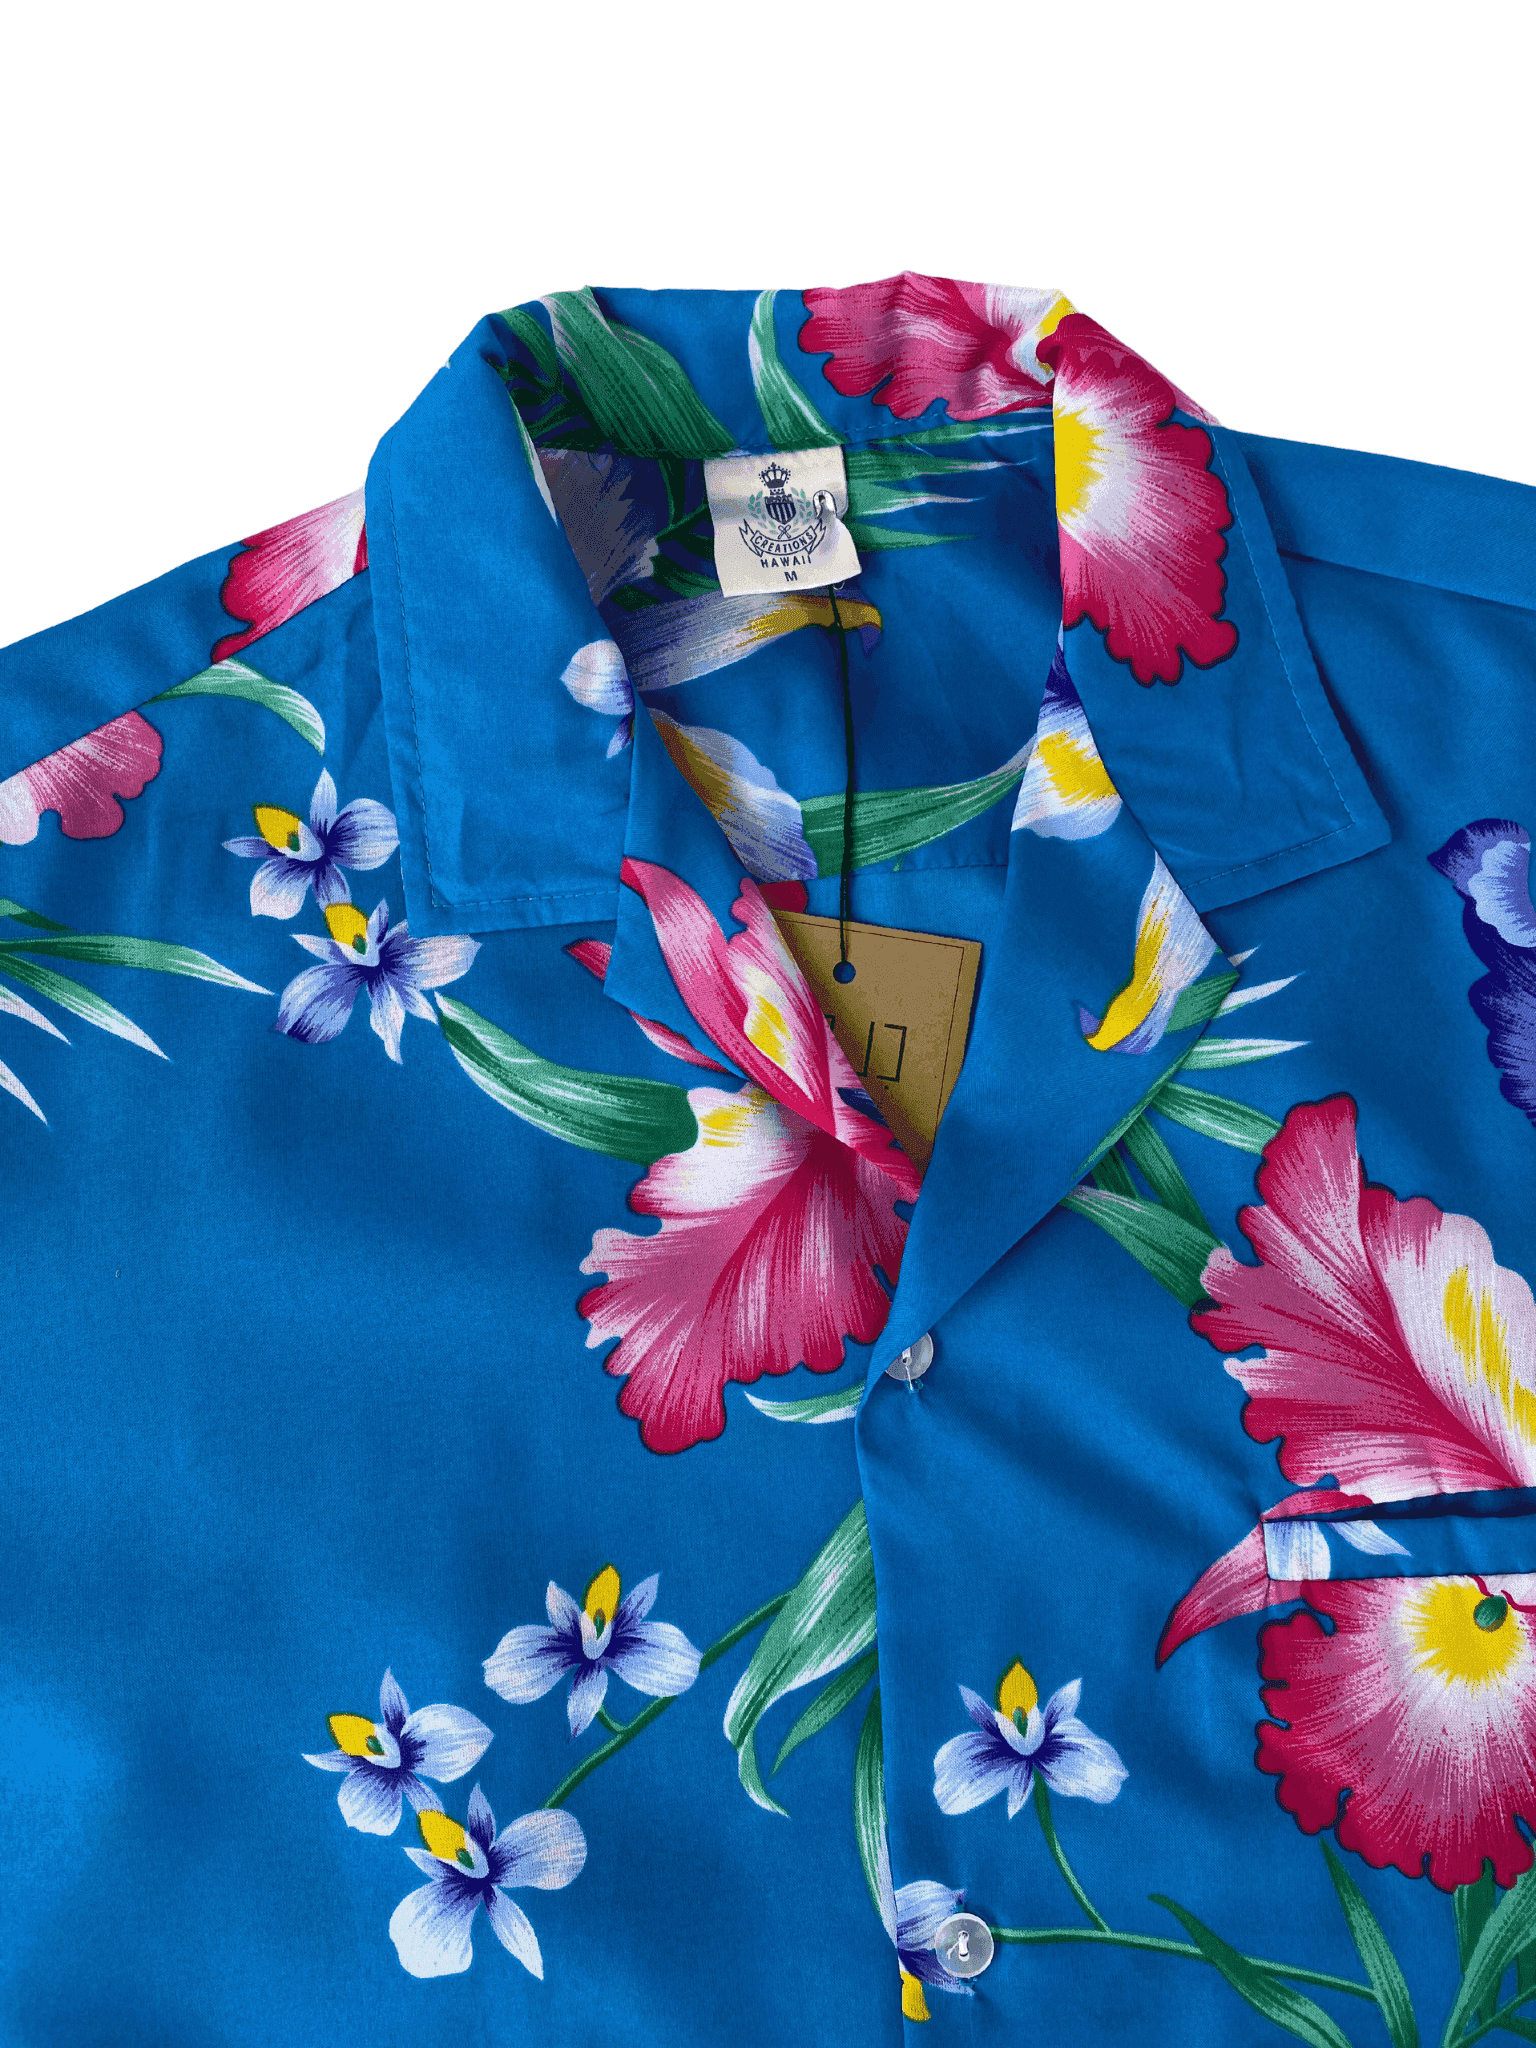 Vintage Creation hawaii floral shirt - Balagan Vintage Half Sleeve Shirt floral shirt, Rahmeh